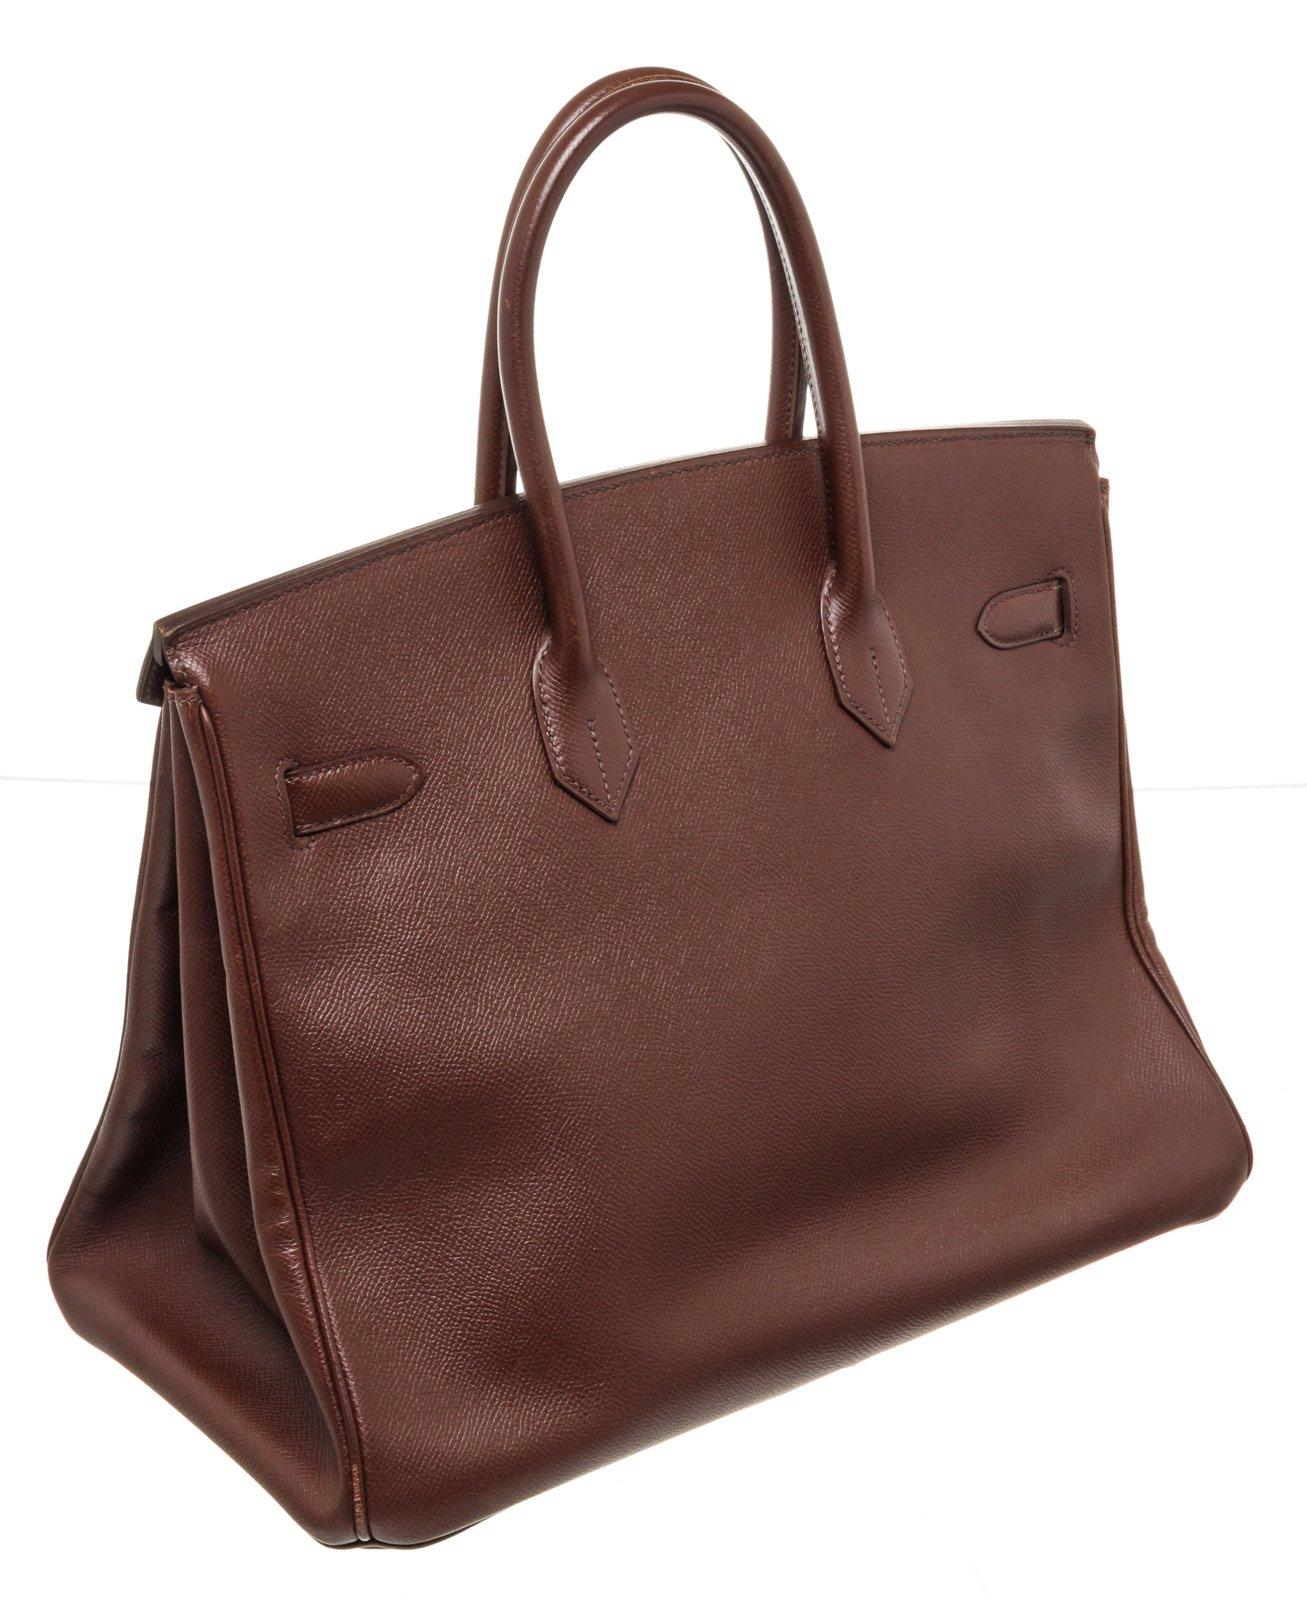 Hermes Brown Leather Birkin 35cm Satchel Bag 1